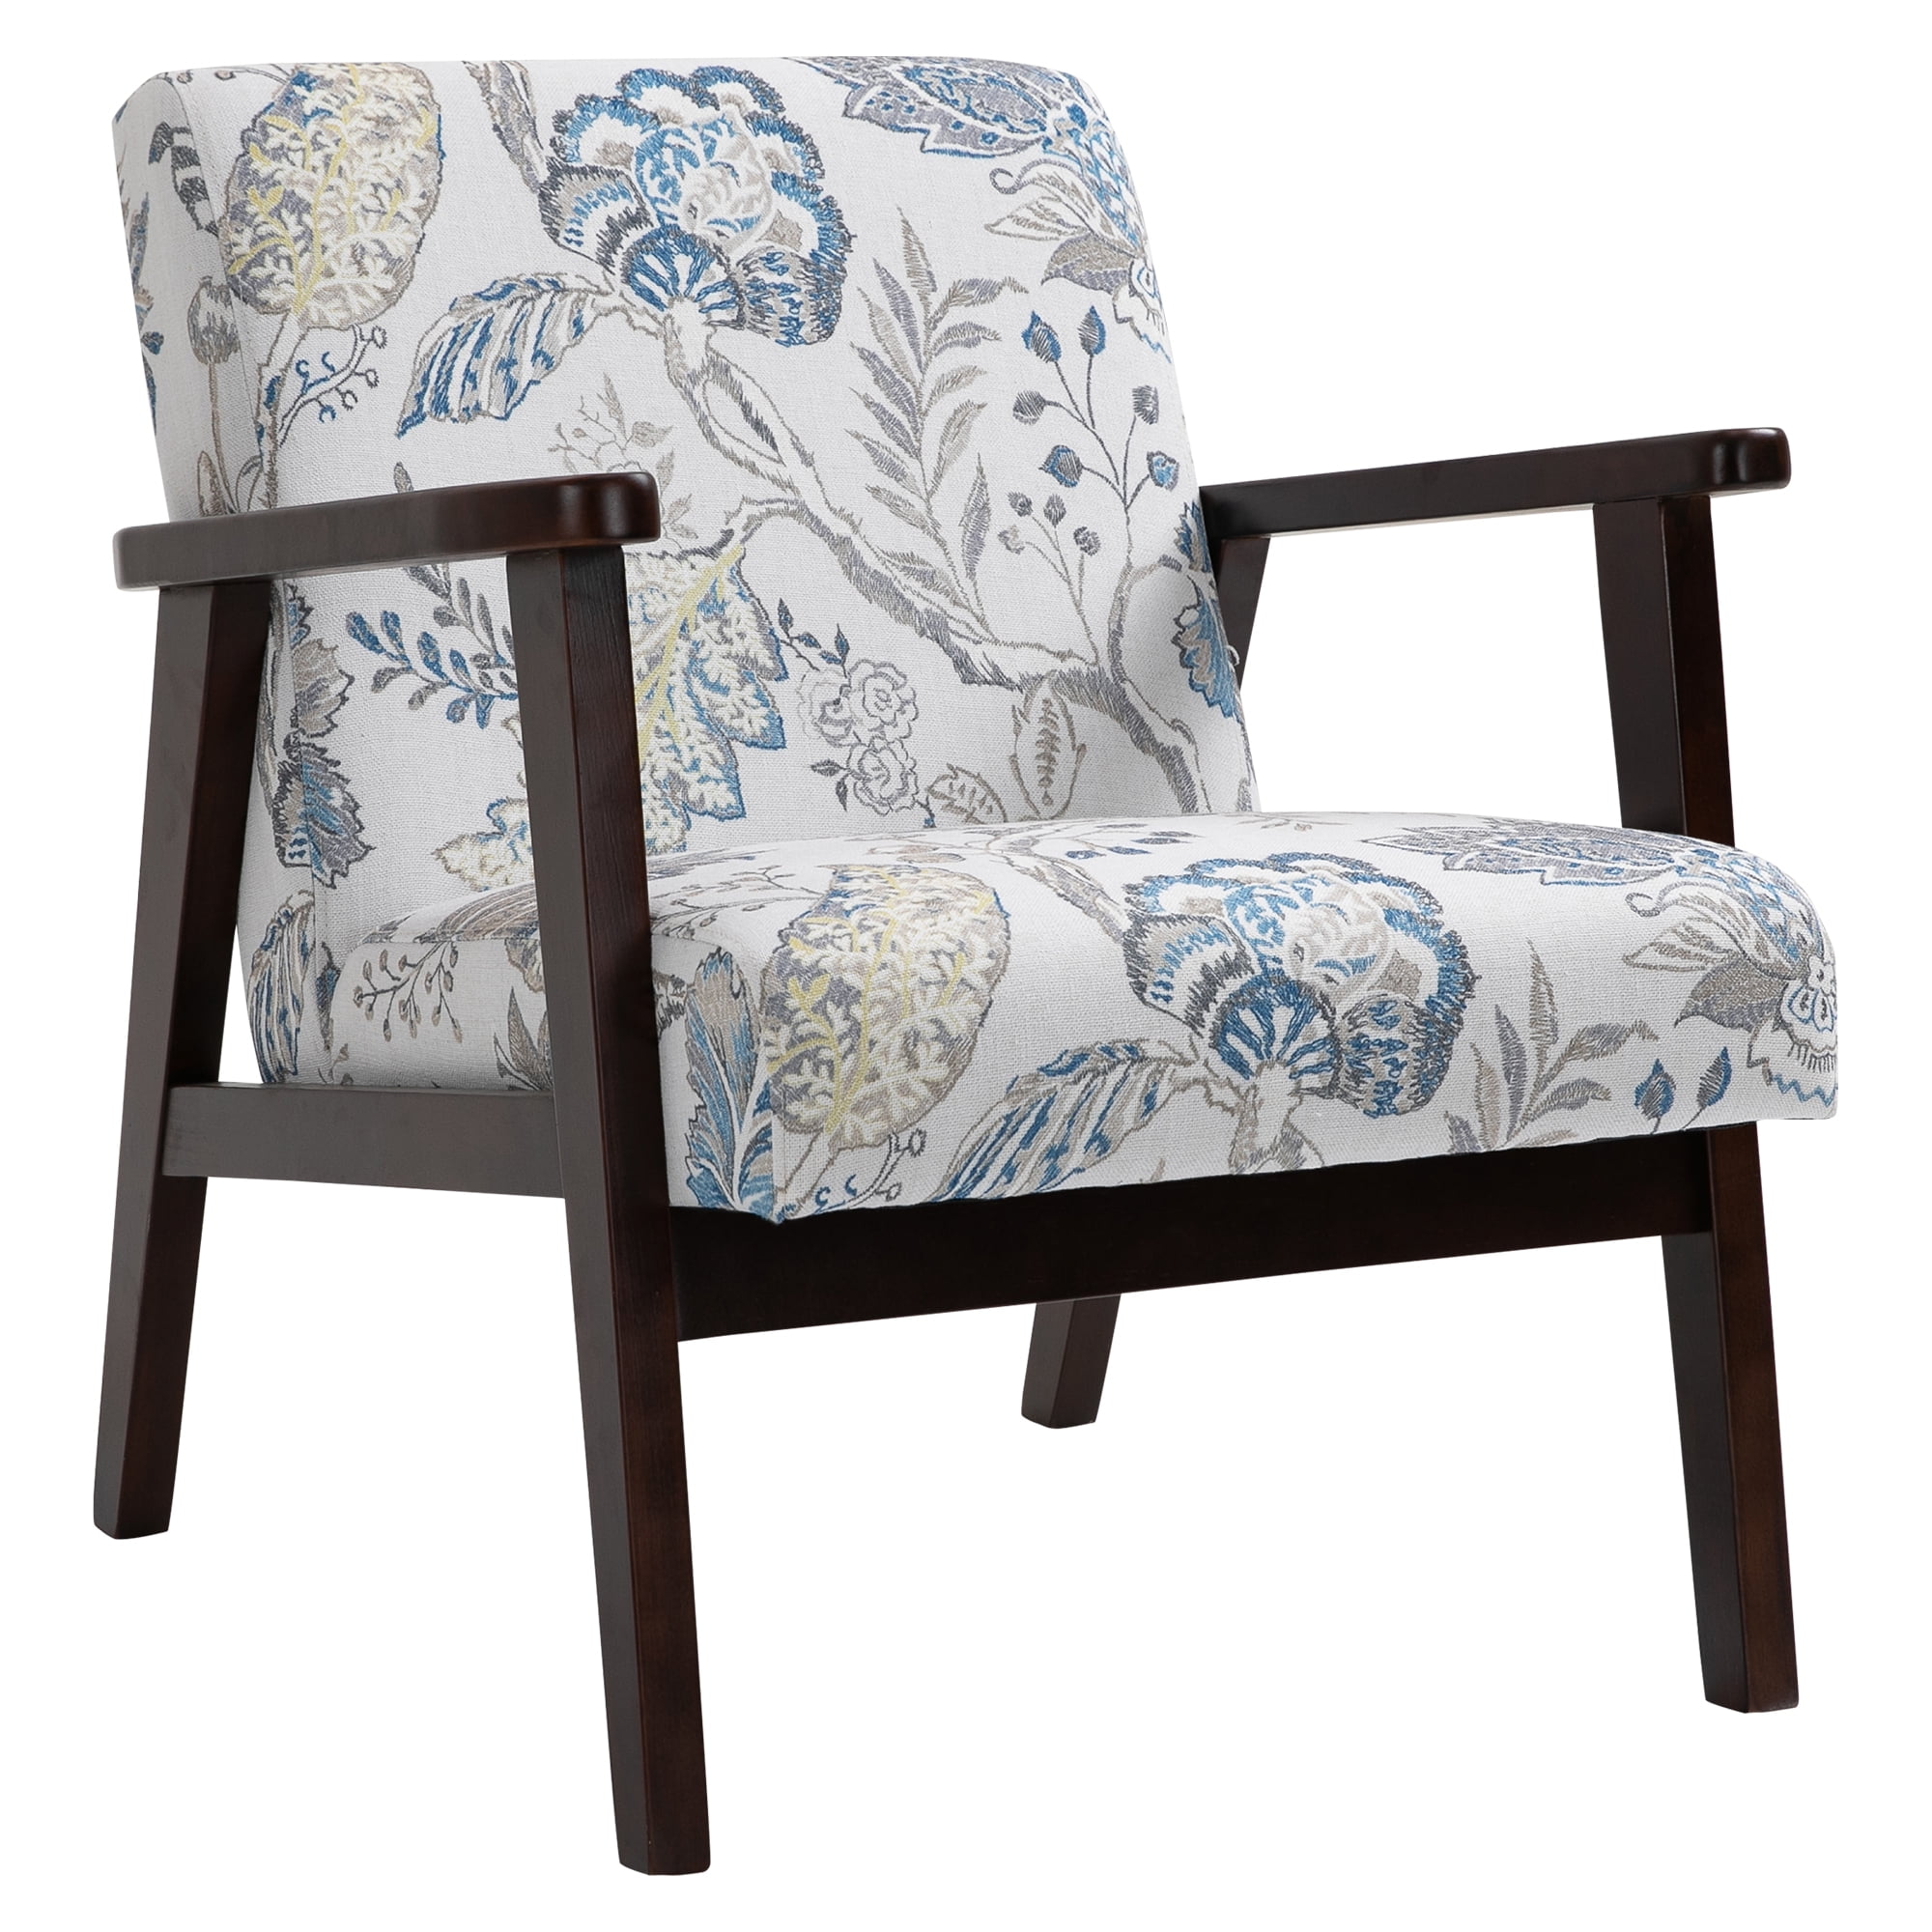 HOMCOM Mid Century Modern Accent Chair, Retro Fabric Armchair, Wooden